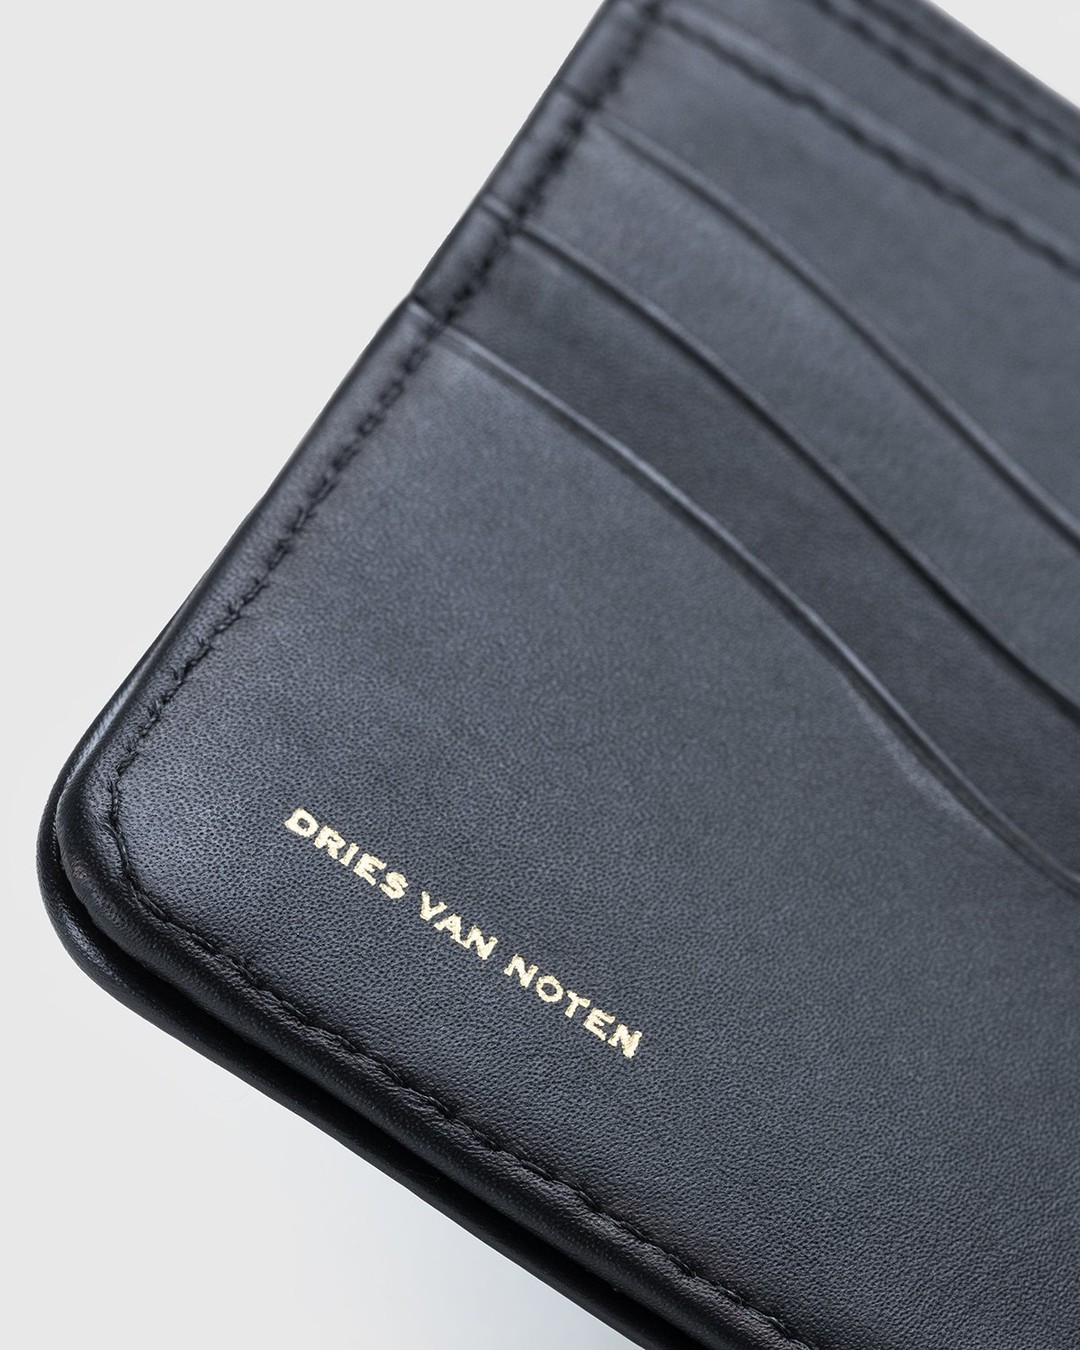 Dries van Noten – Leather Wallet Black - Wallets - Black - Image 4